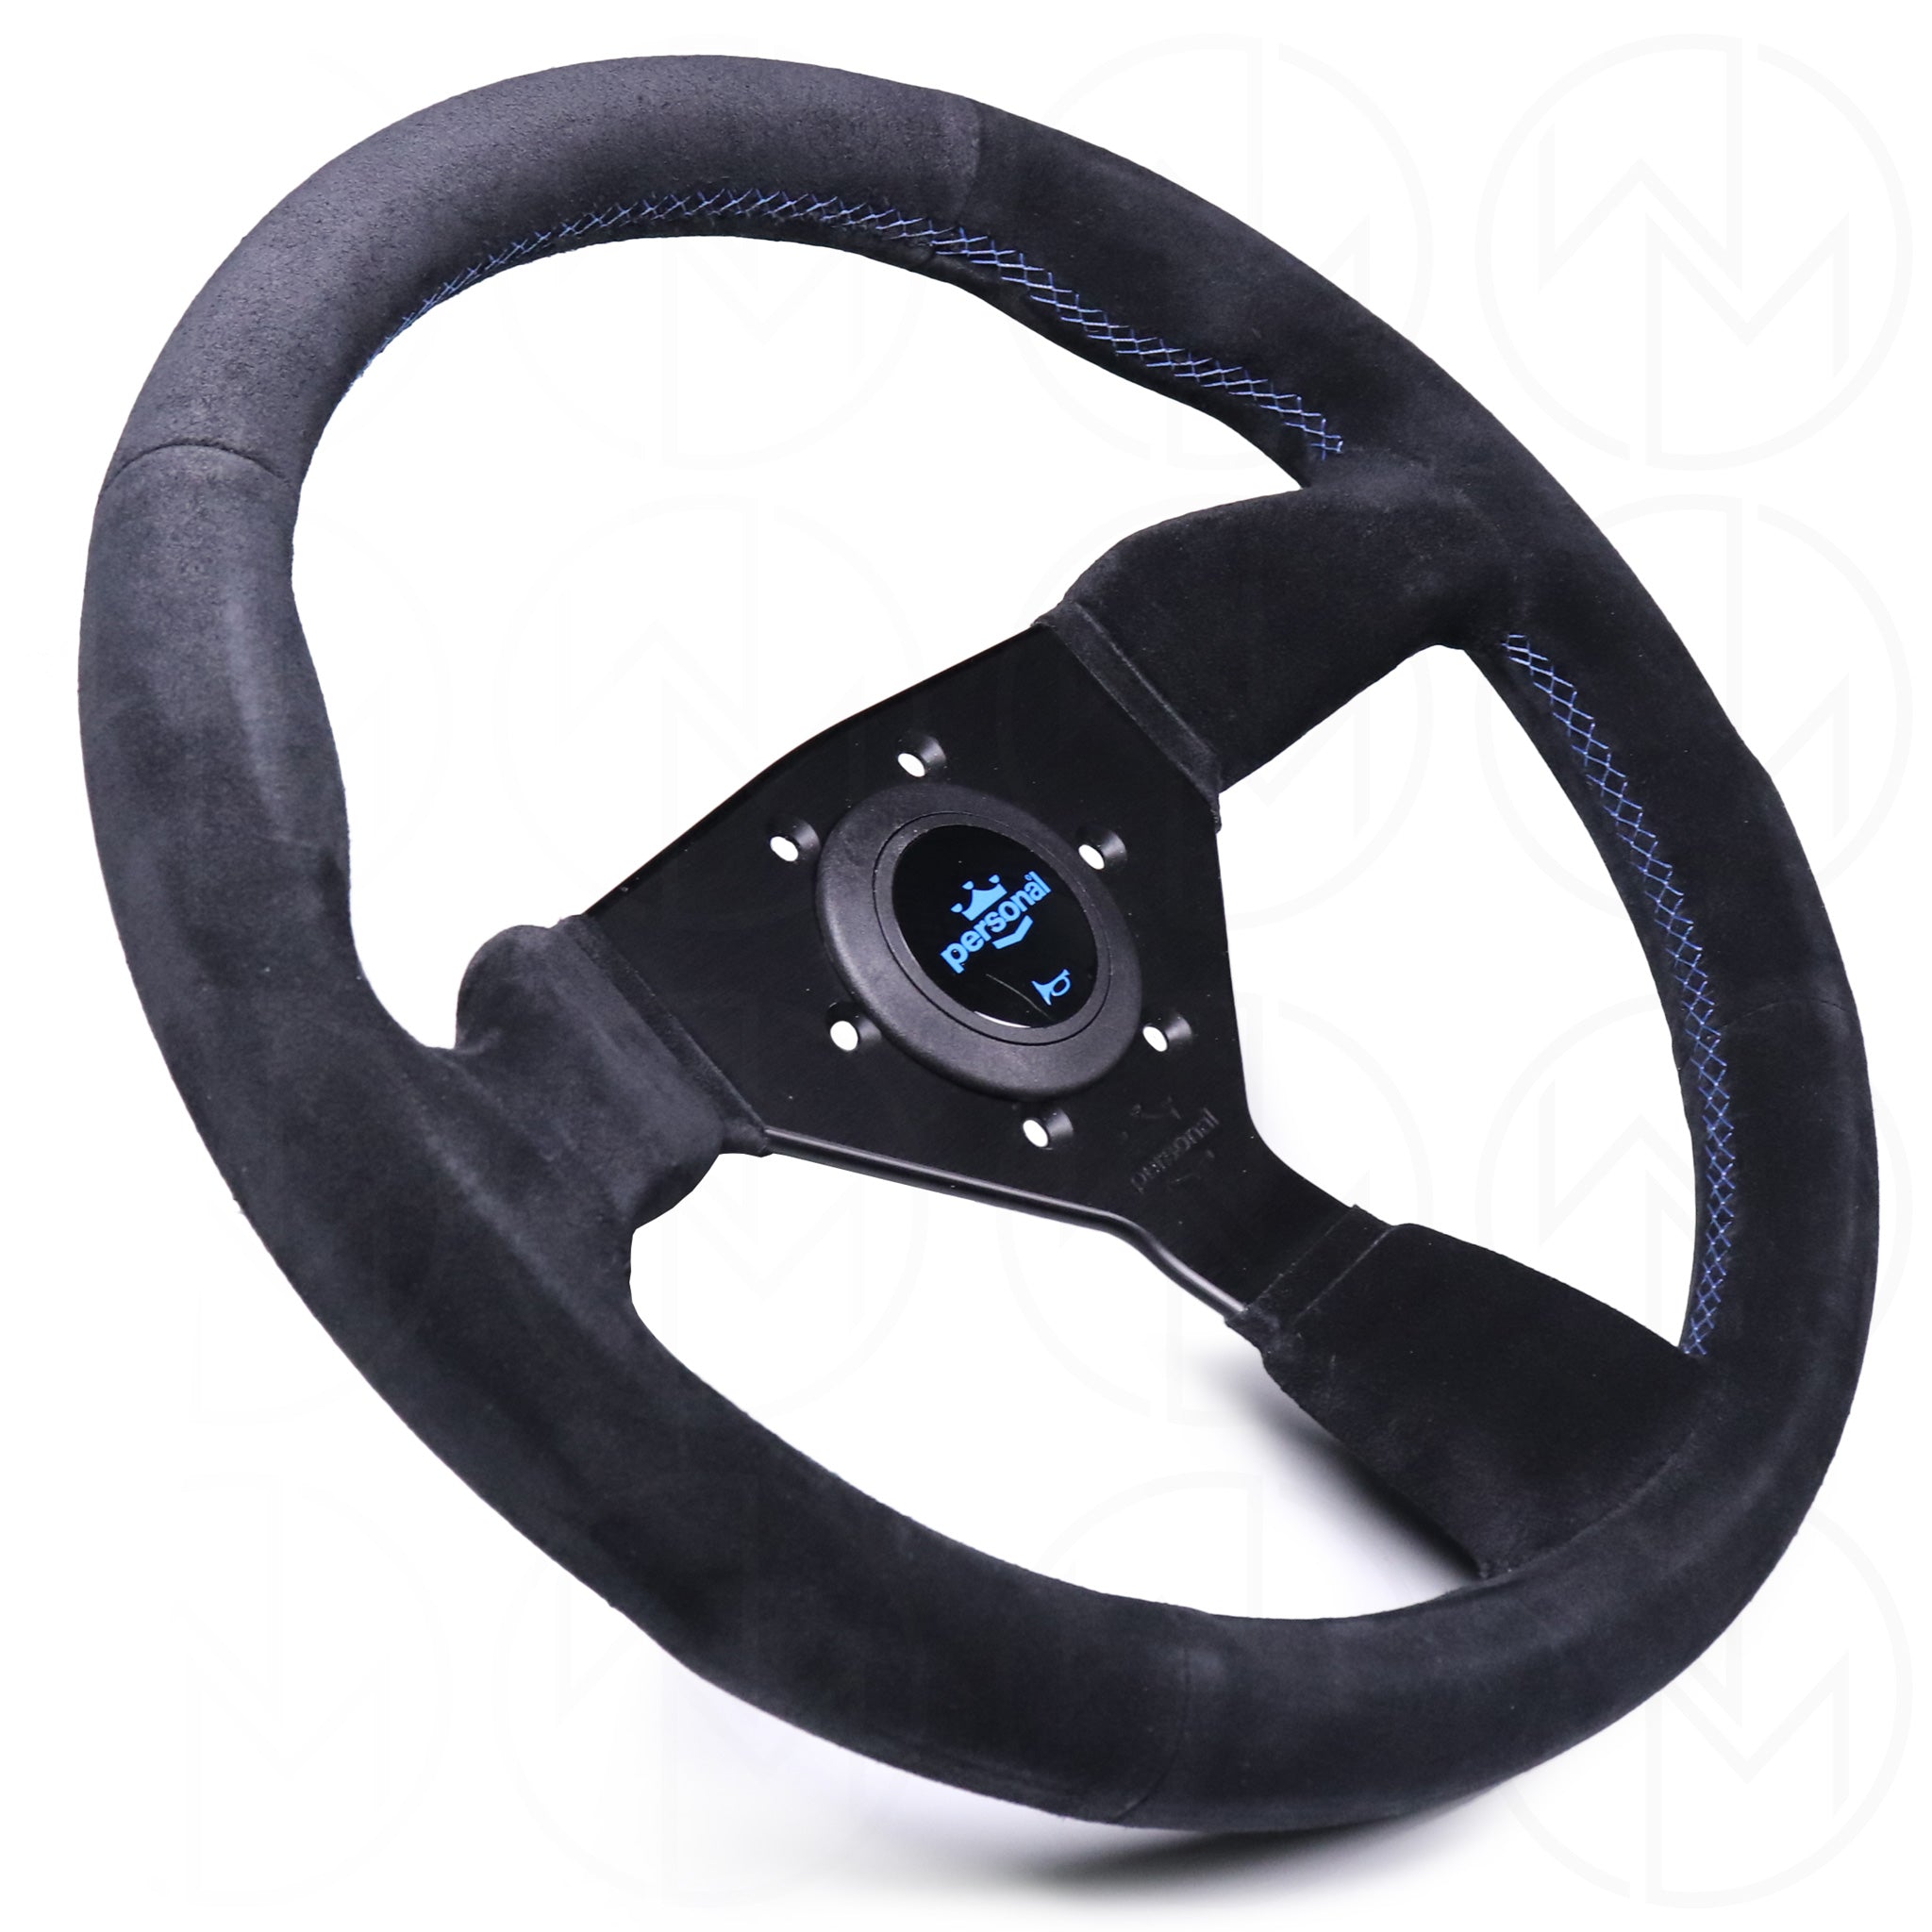 Personal Grinta Steering Wheel - 350mm Suede w/Blue Stitch